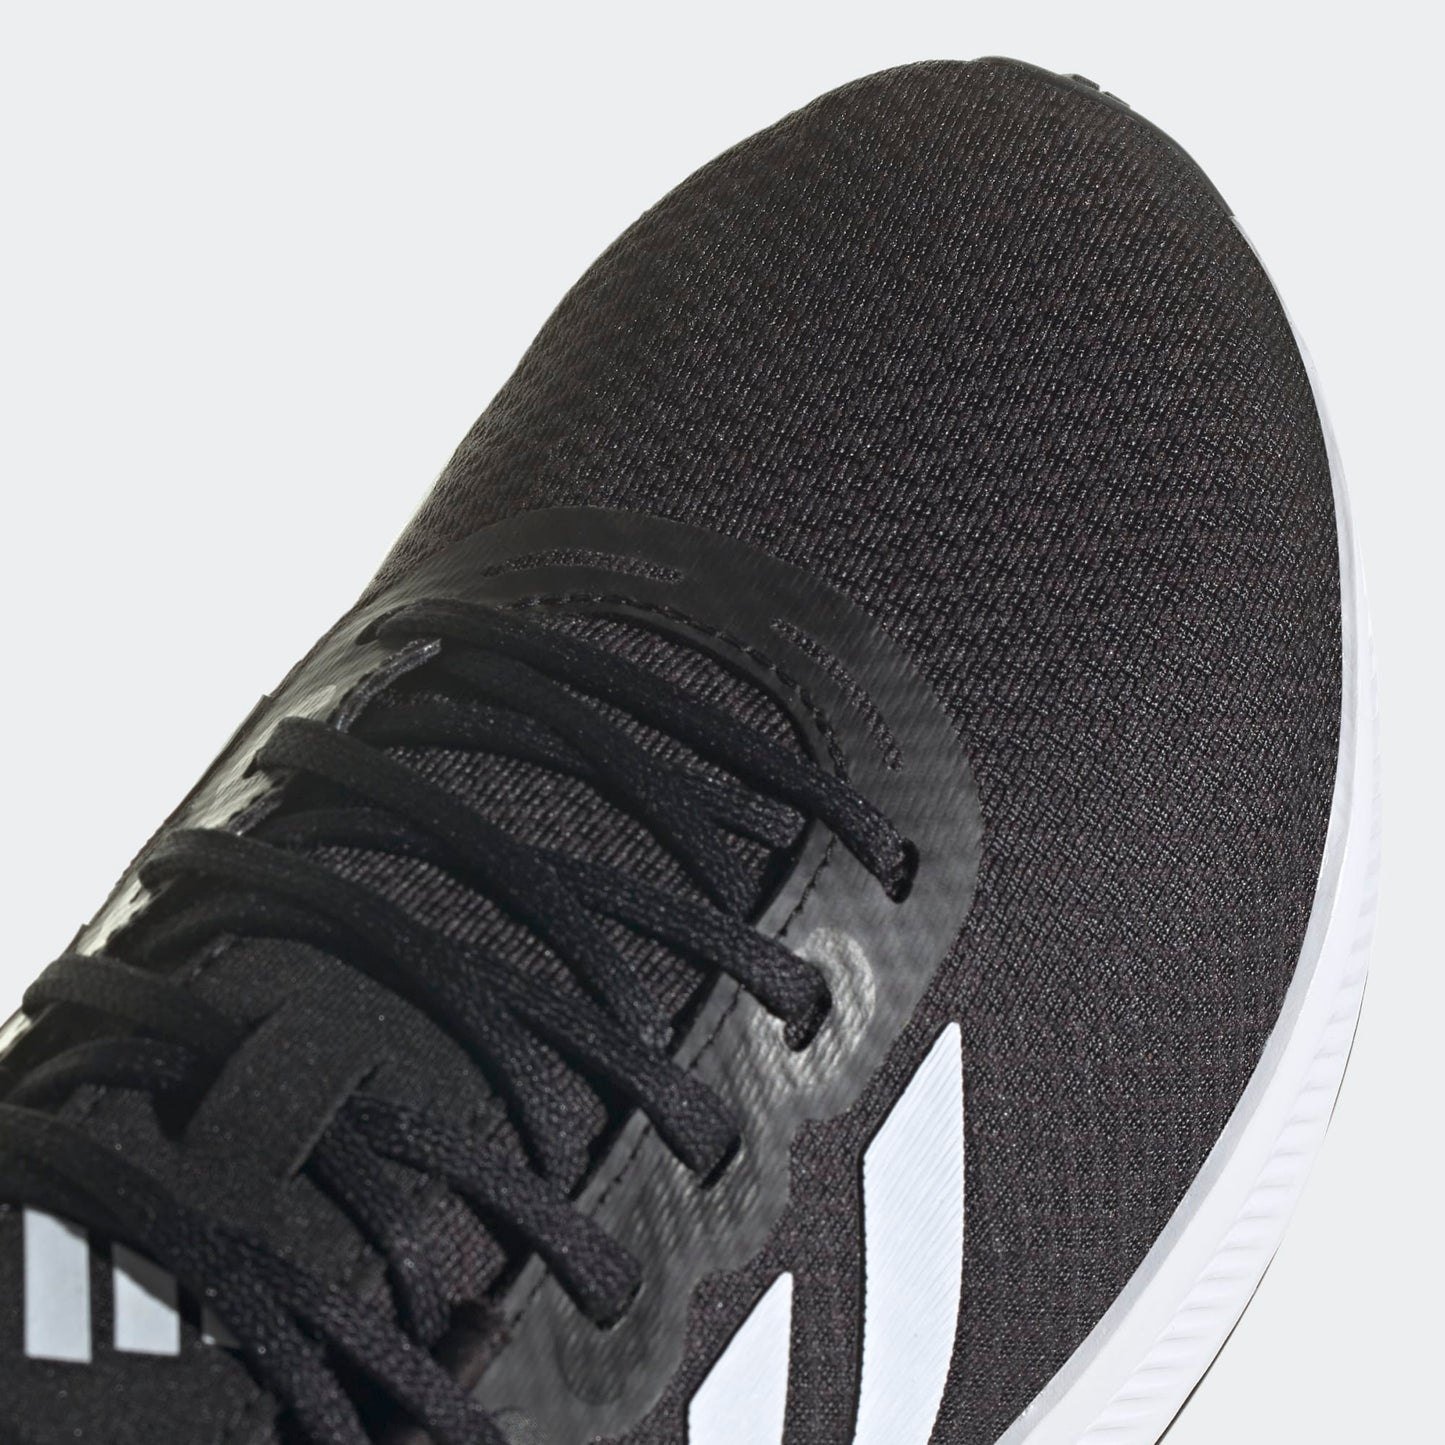 Adidas Men's Runfalcon 3 Cloudfoam Low Running Shoes, Core Black / Cloud White / Core Black